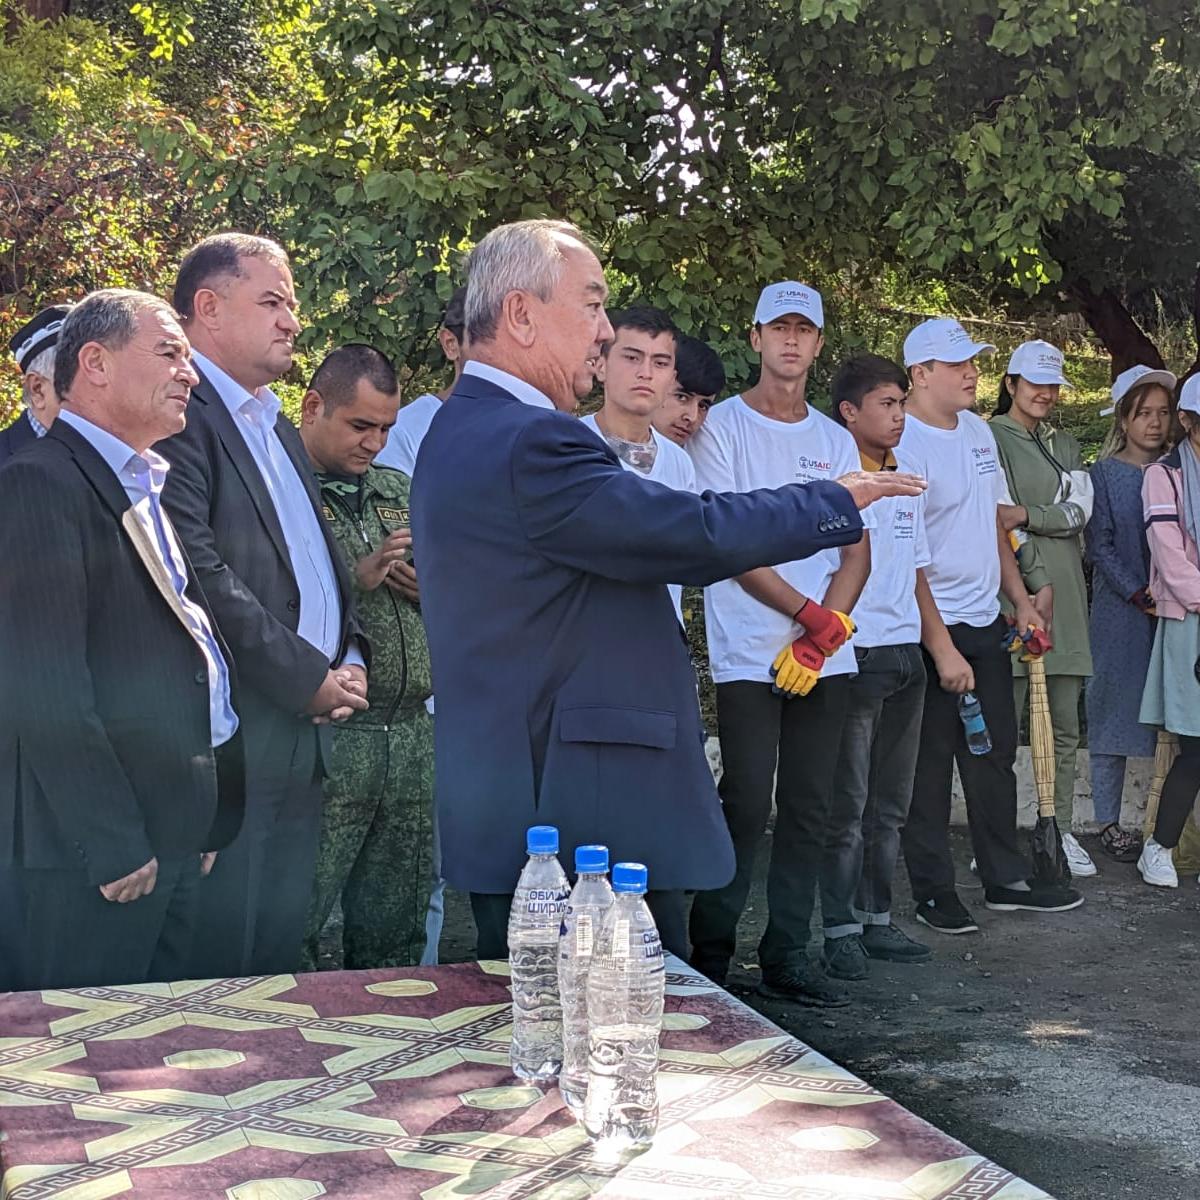 National celebration of Syr Darya River Day in Tajikistan